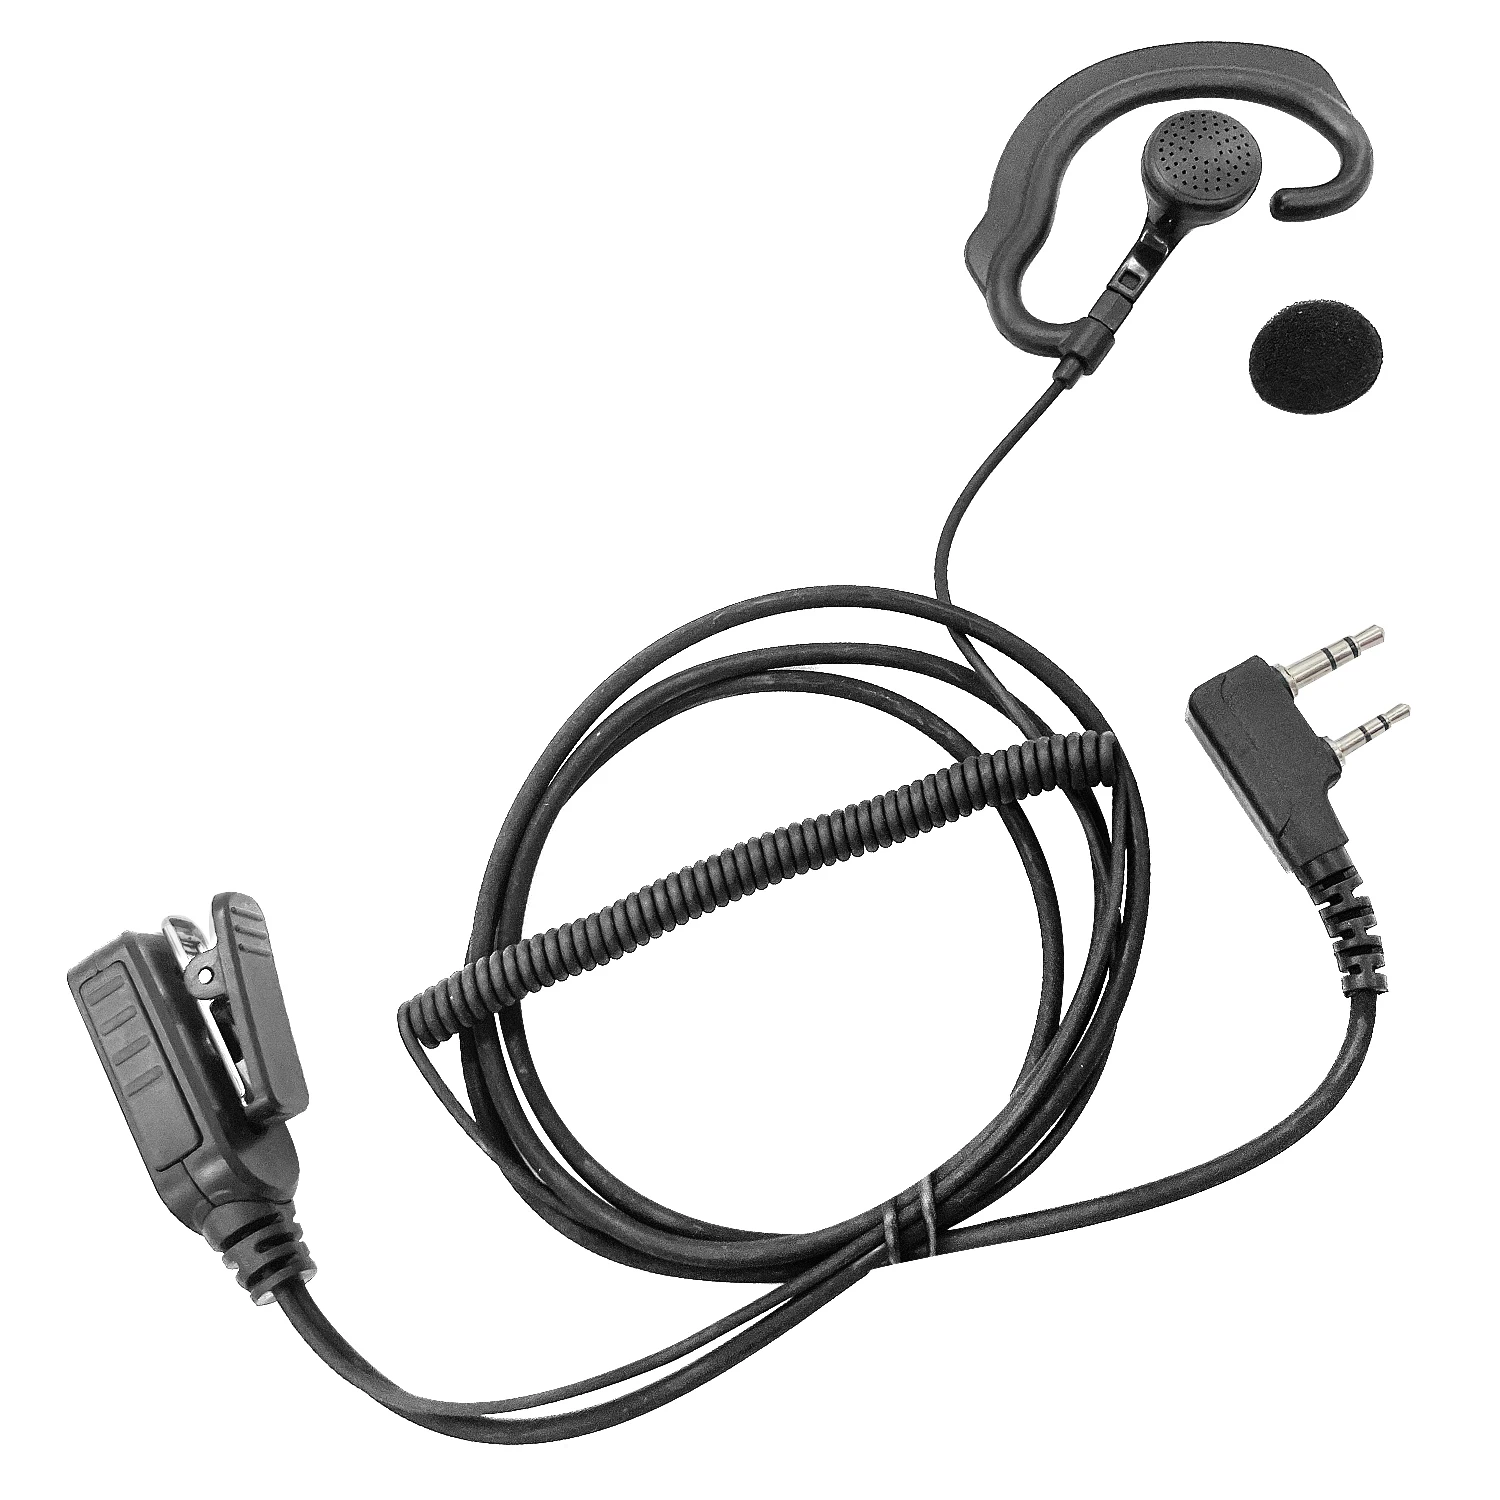 Wire-rolled G headphones  walkie talkie Earpiece microphone headset for baofen UV-3R, UV-5R, UV-5RA, UV-5X3, UV-5RX3, UV-5R V2+